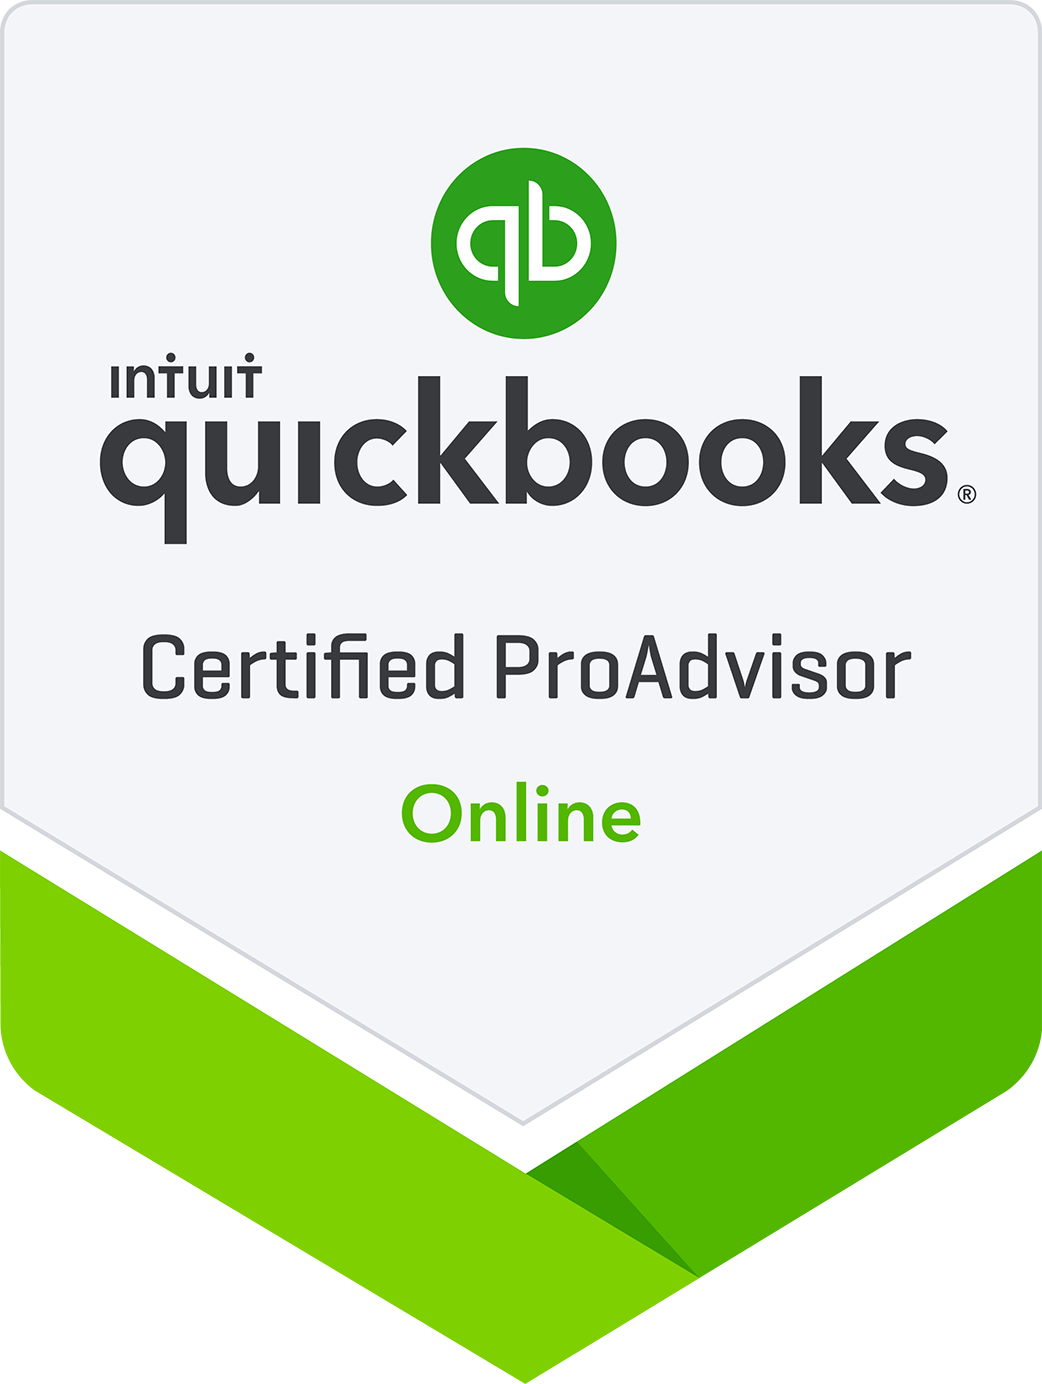 QuickBooks Certified Proadvisor Badge